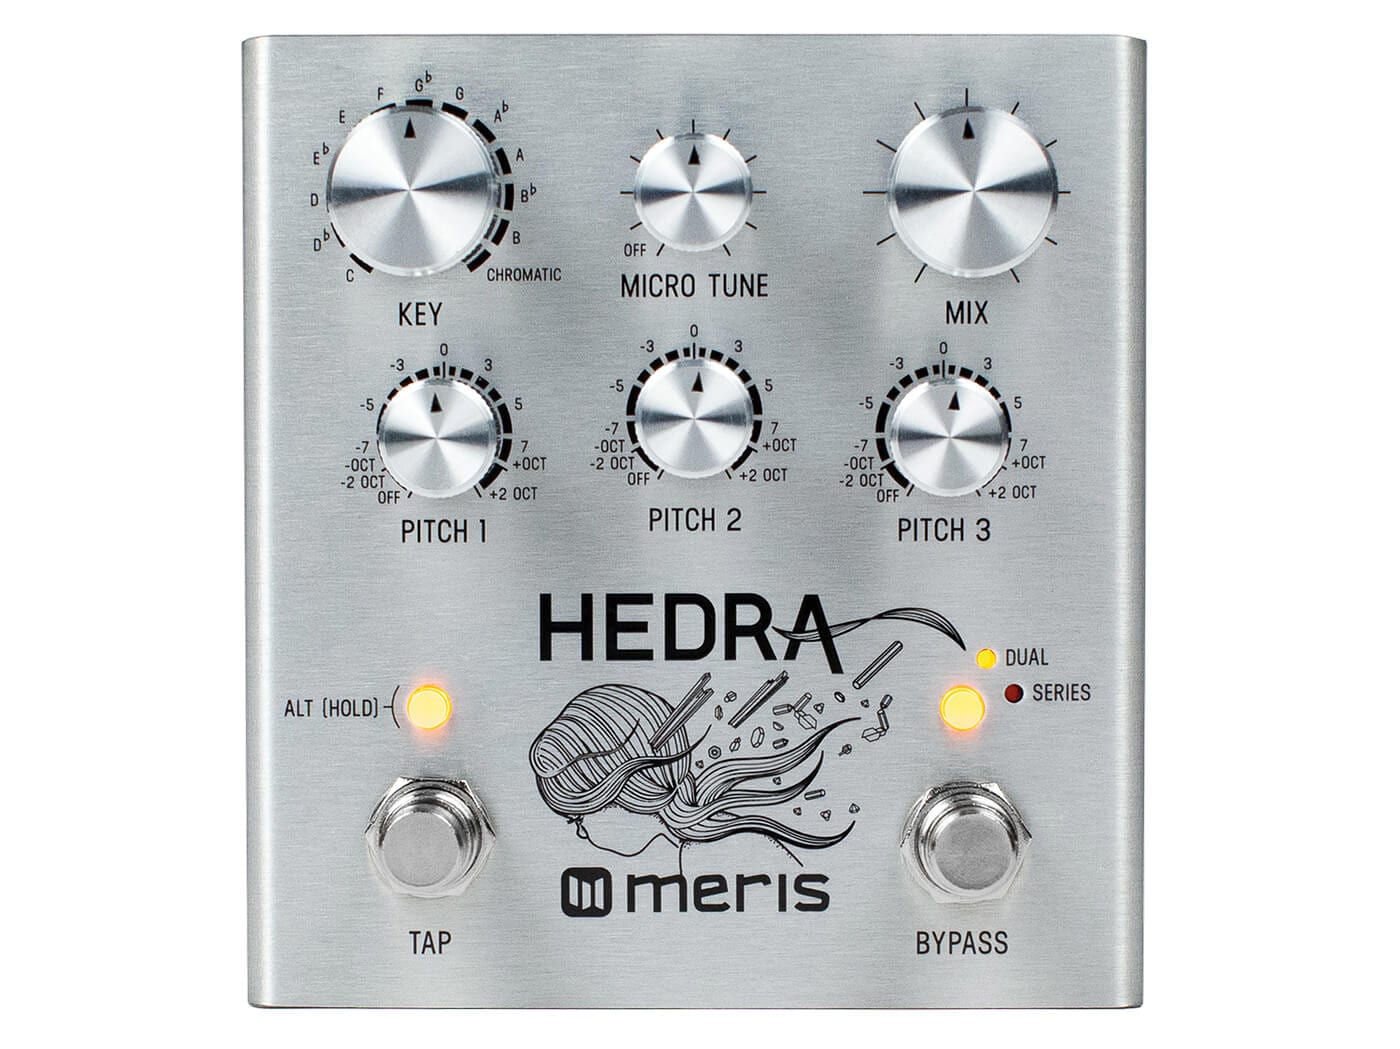 Meris Hedra - Classic '90s studio rack pitch shifting in a pedal!